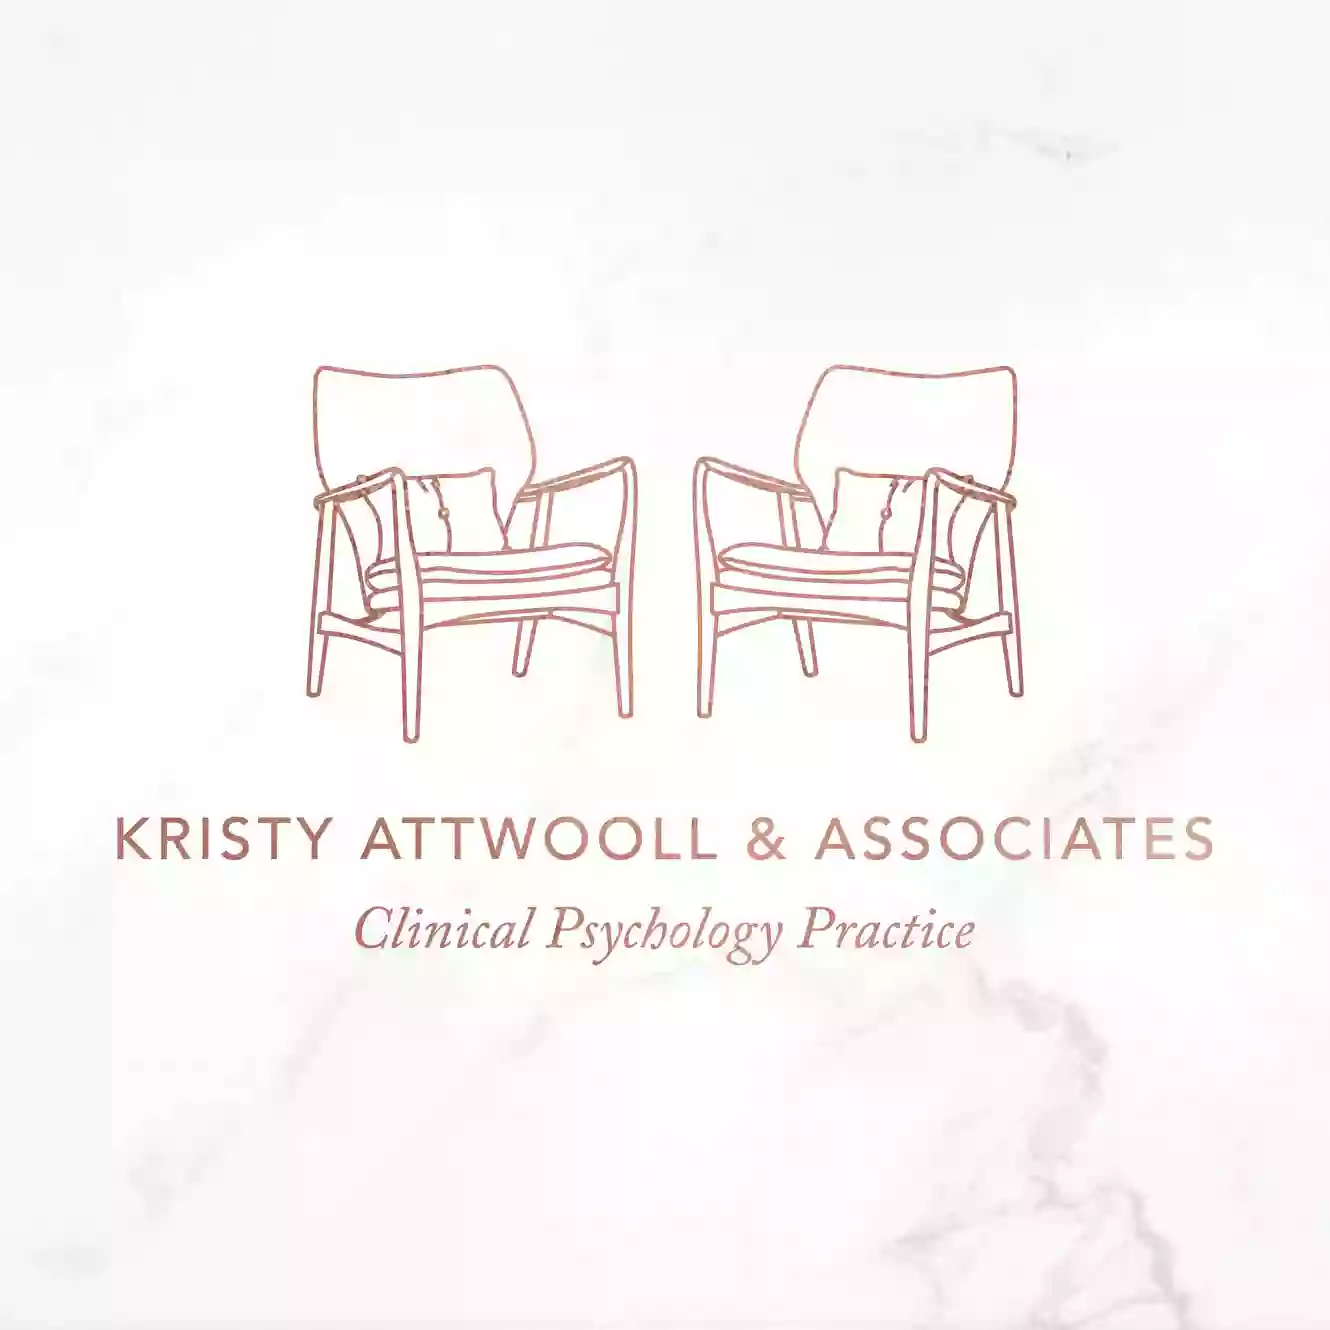 Kristy Attwooll & Associates St Leonards Office